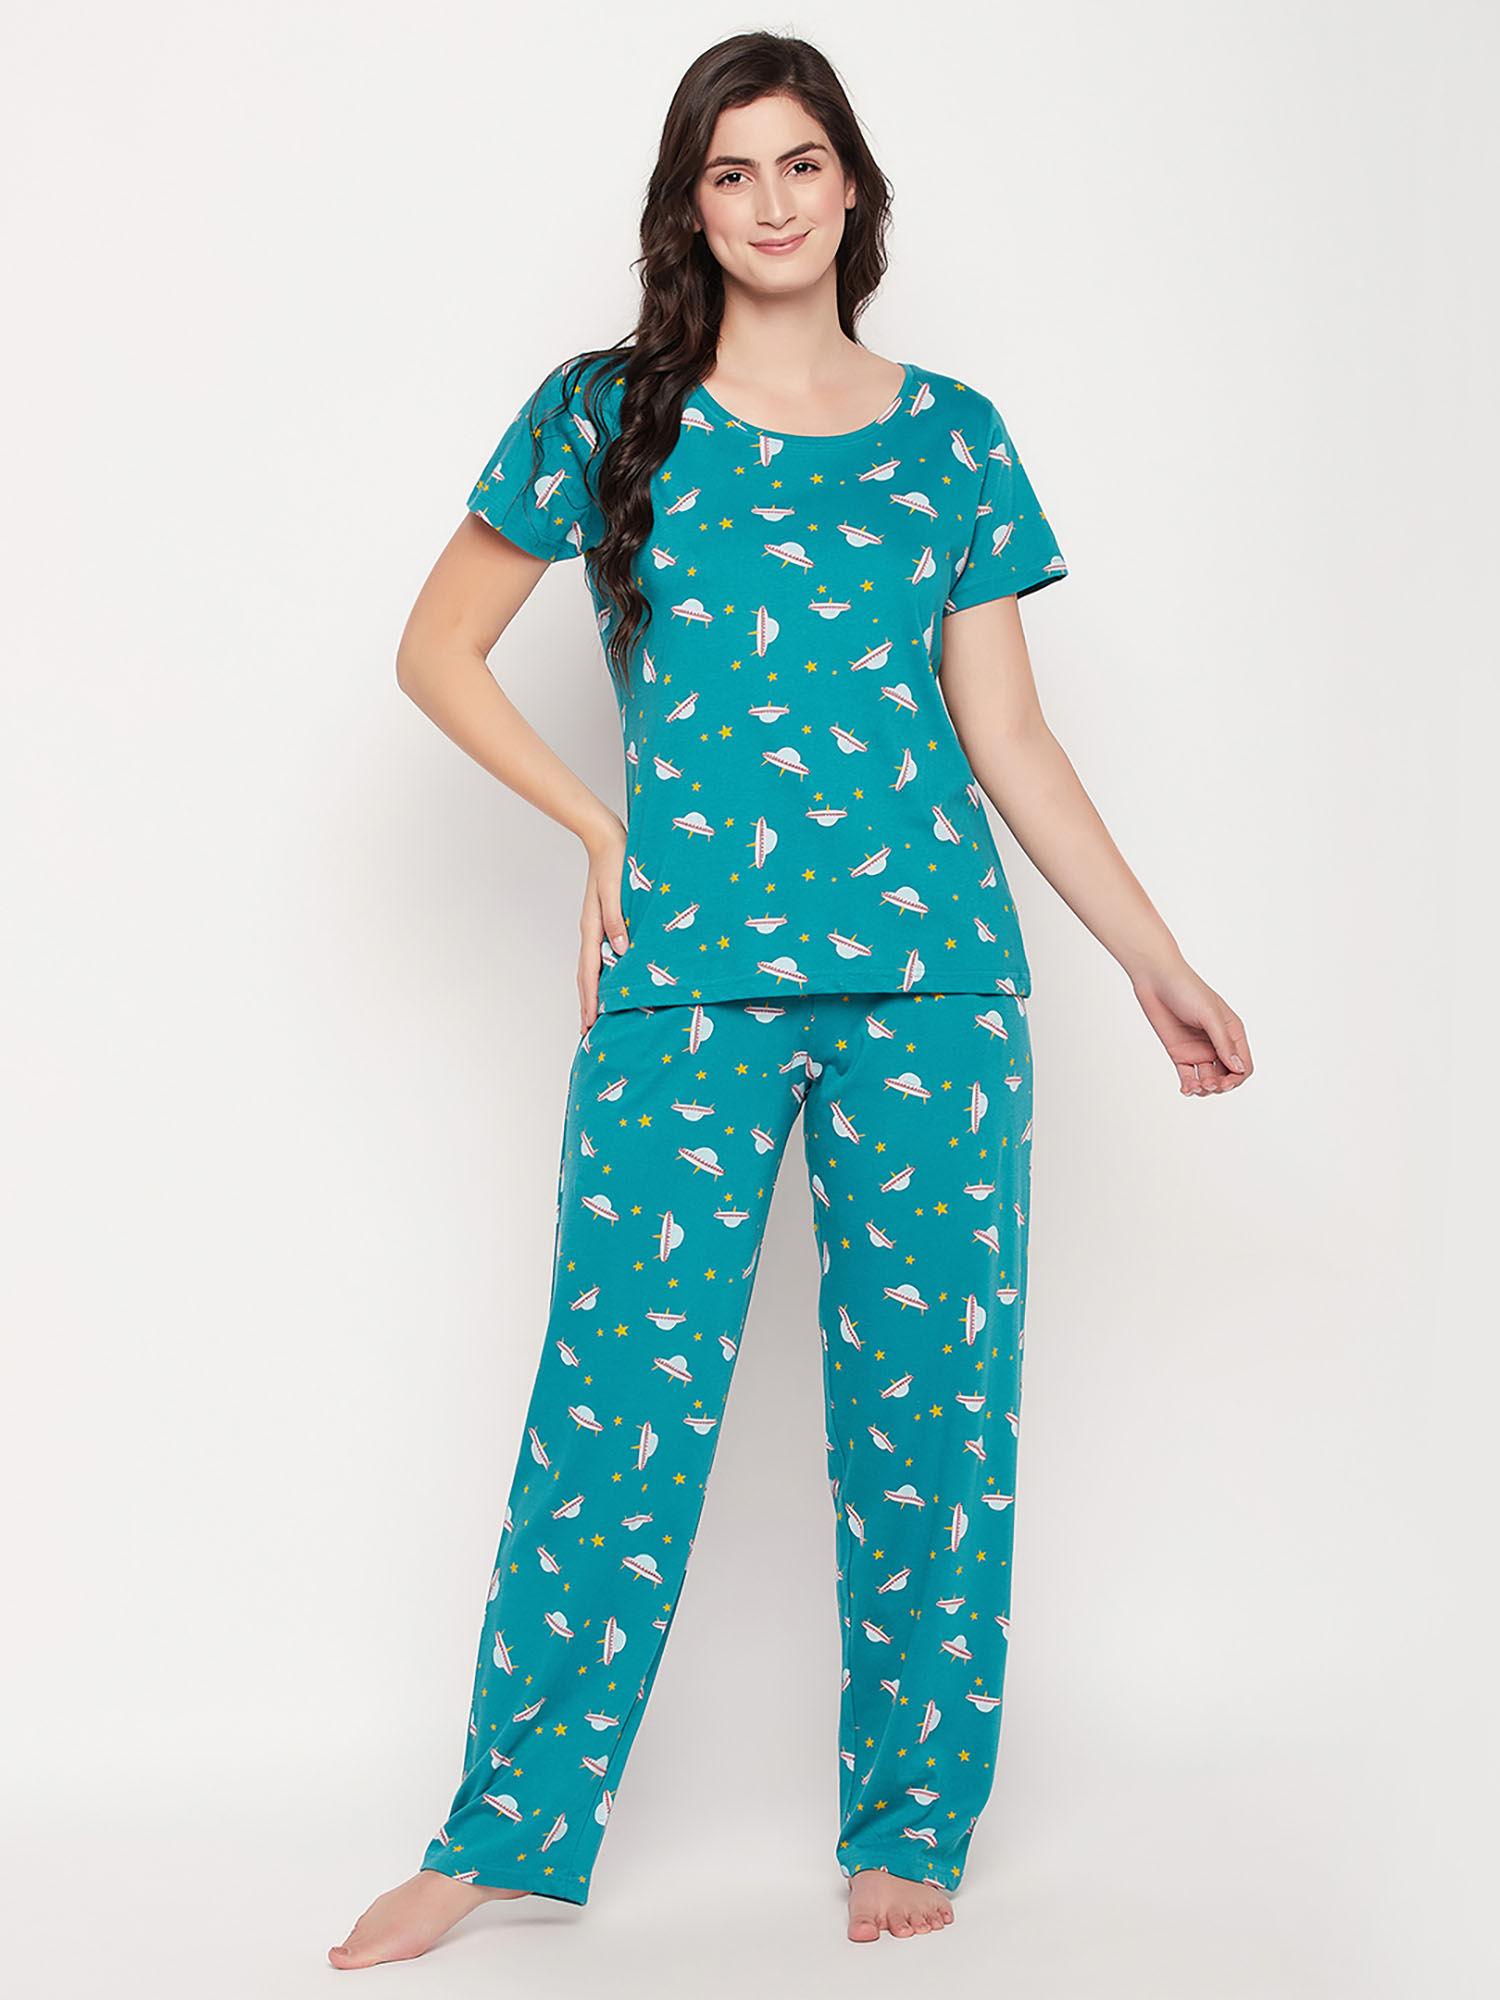 spaceship print top & pyjama teal blue - 100% cotton (set of 2)